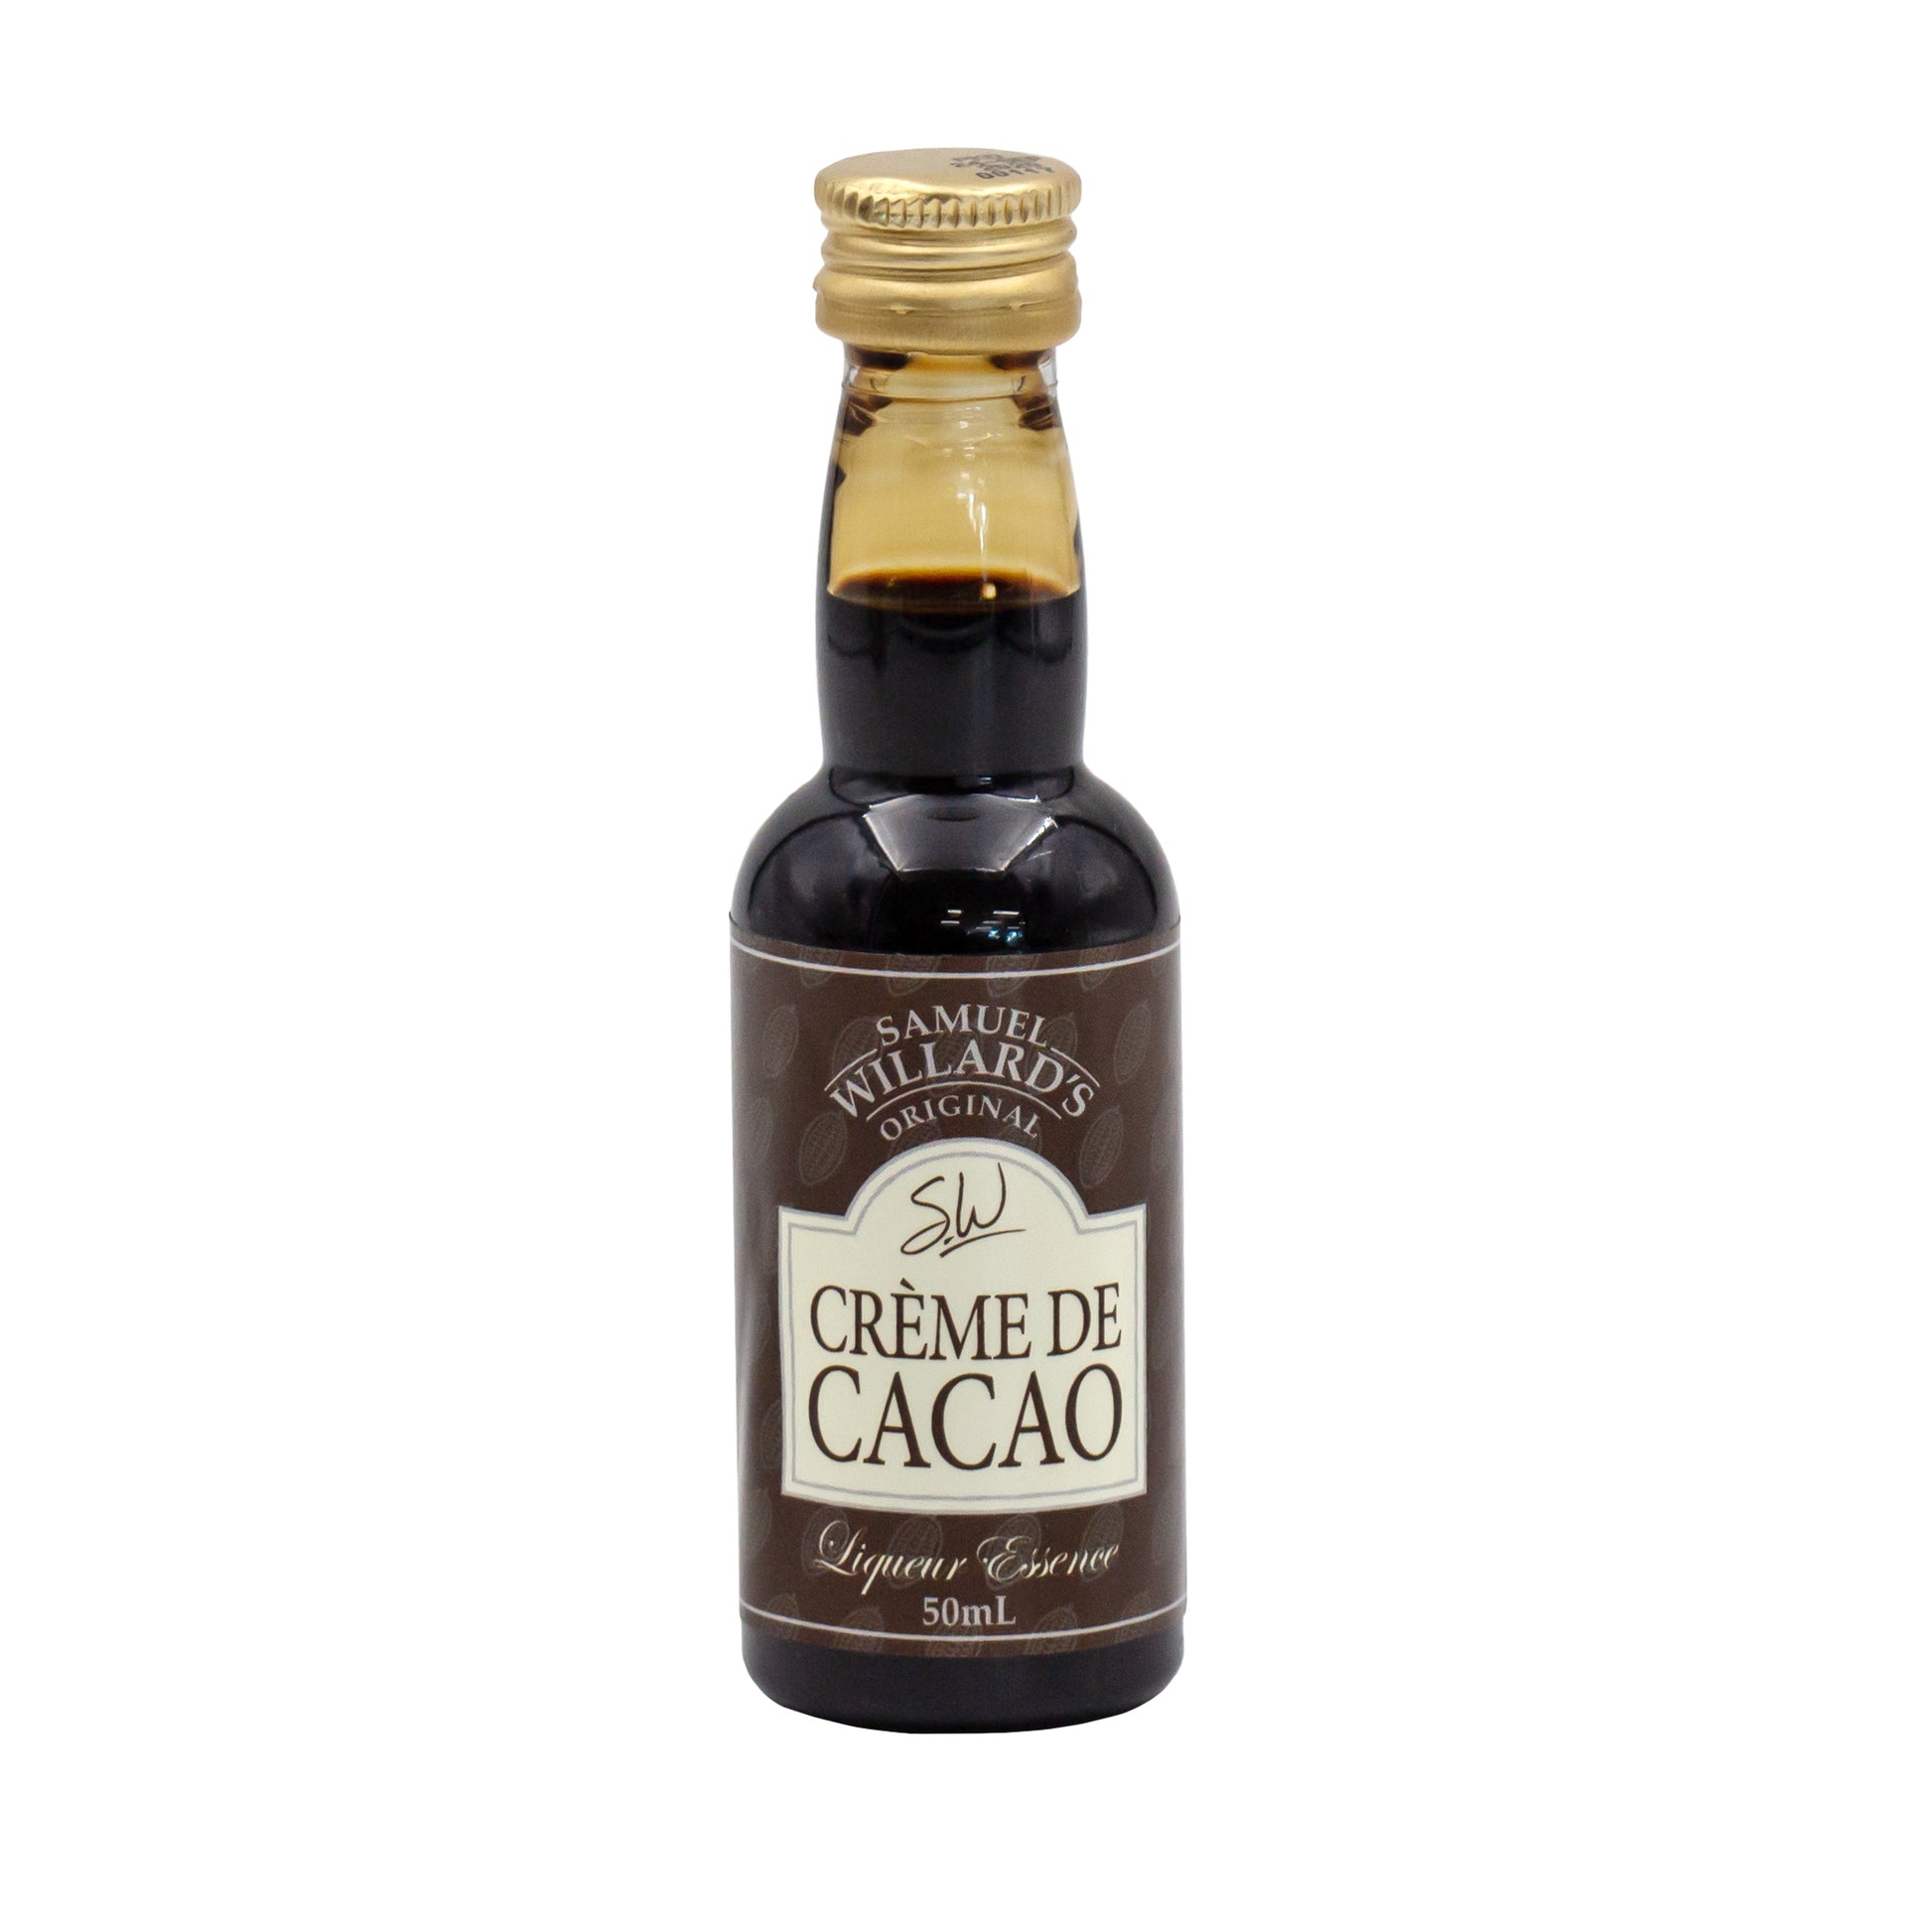 50ml bottle of samuel willards creme de cacao essence